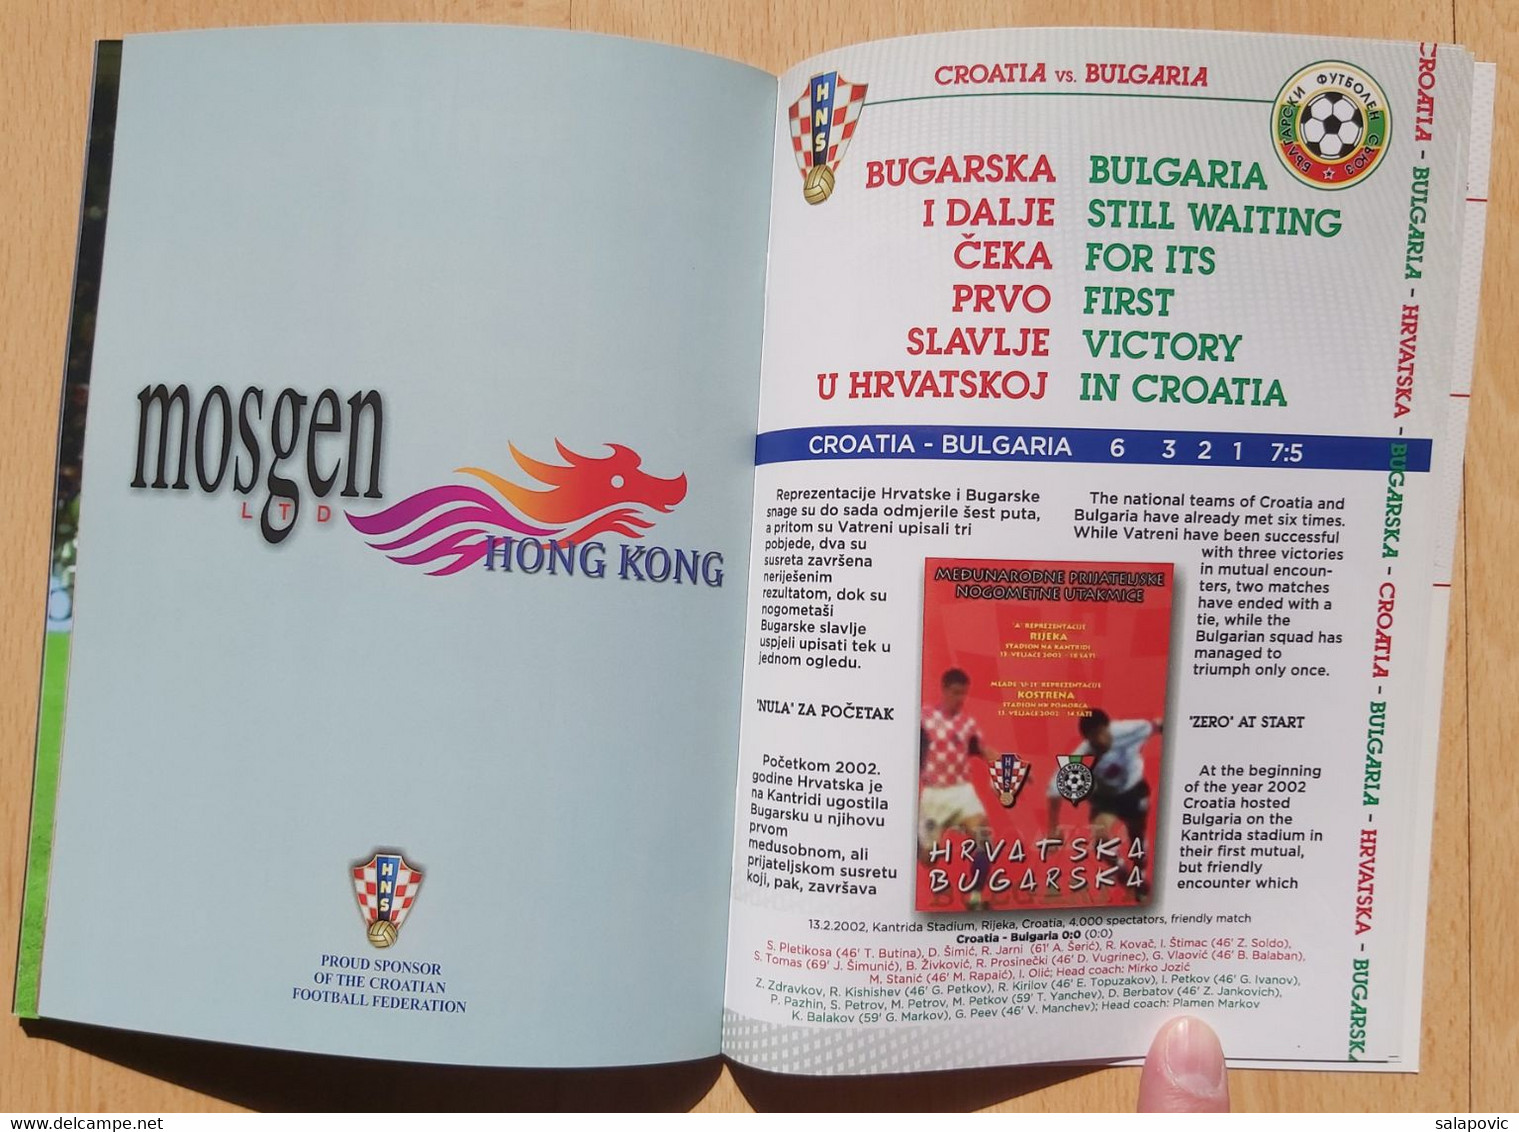 PROGRAM Hrvatska Vs Bugarska 10.10. 2015 European Qualifiers CROATIA Vs BULGARIA - Bücher